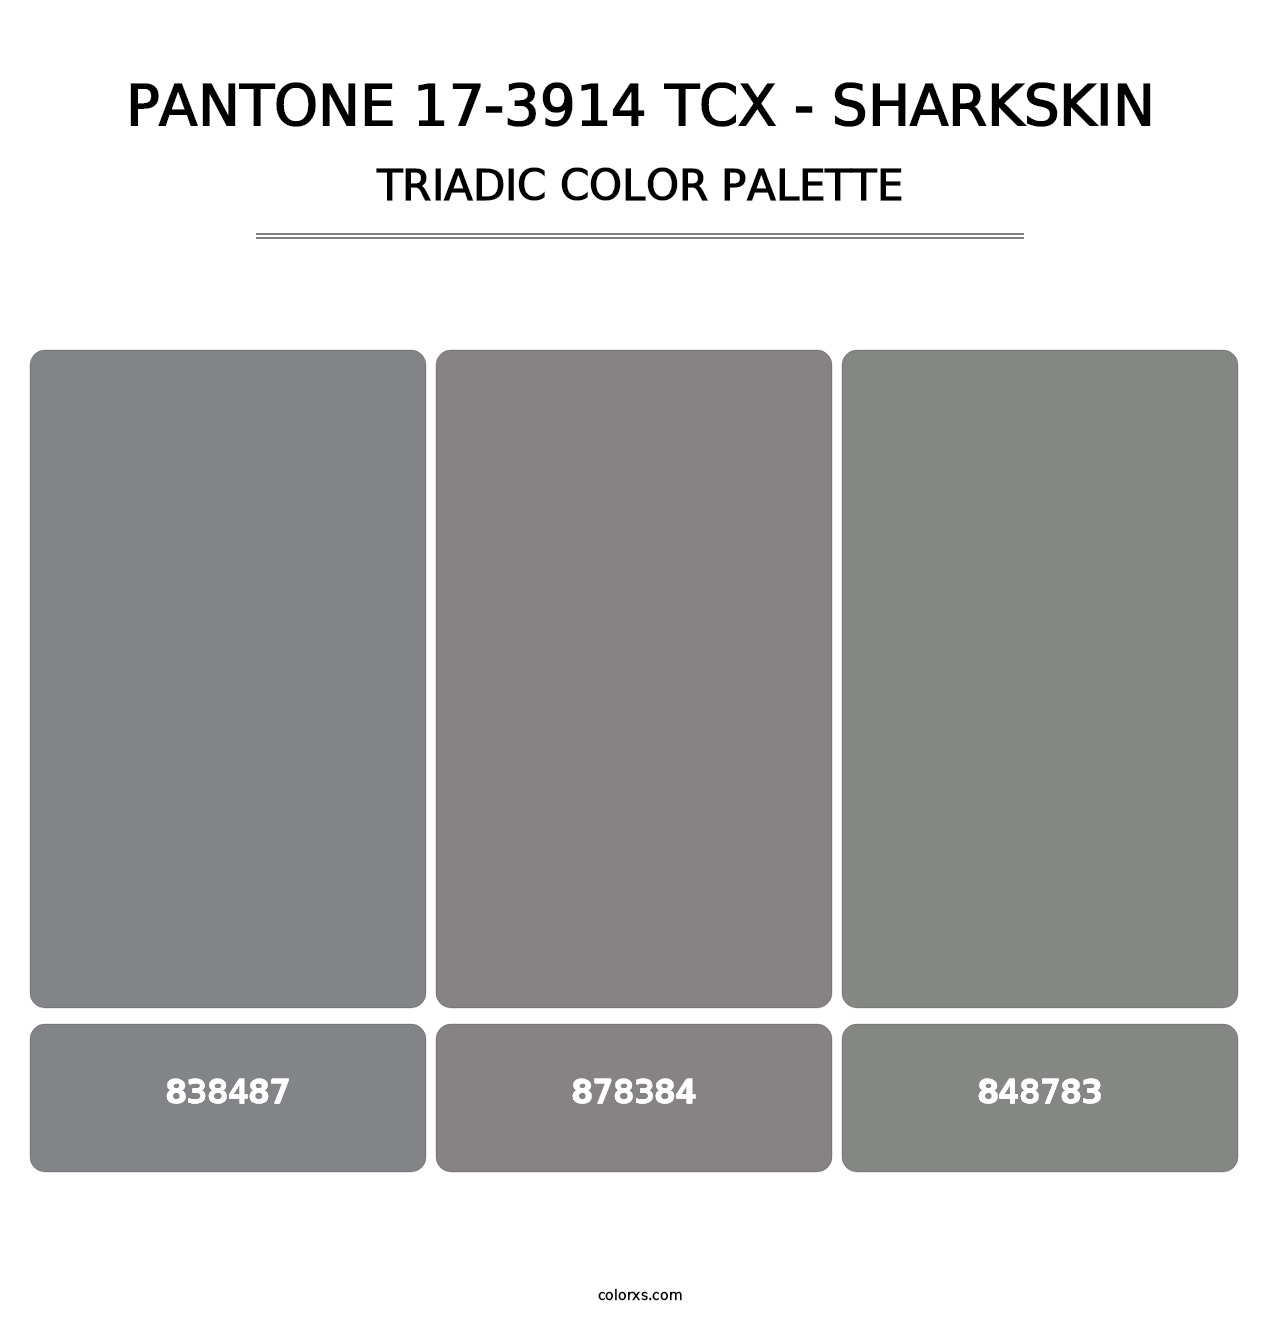 PANTONE 17-3914 TCX - Sharkskin - Triadic Color Palette